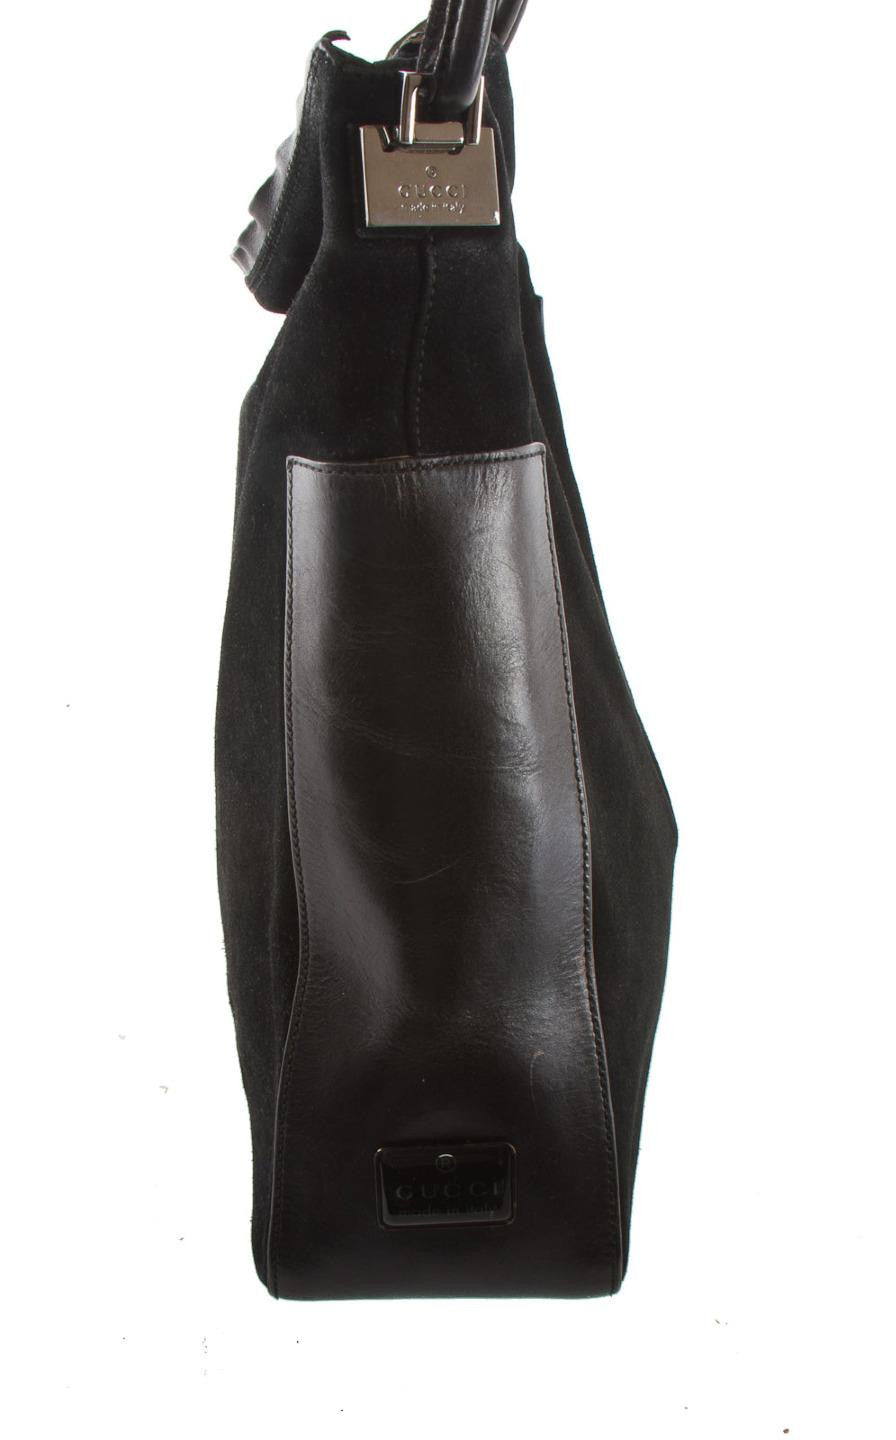 Gucci Suede Shoulder Bag - Black Shoulder Bags, Handbags - GUC1323472